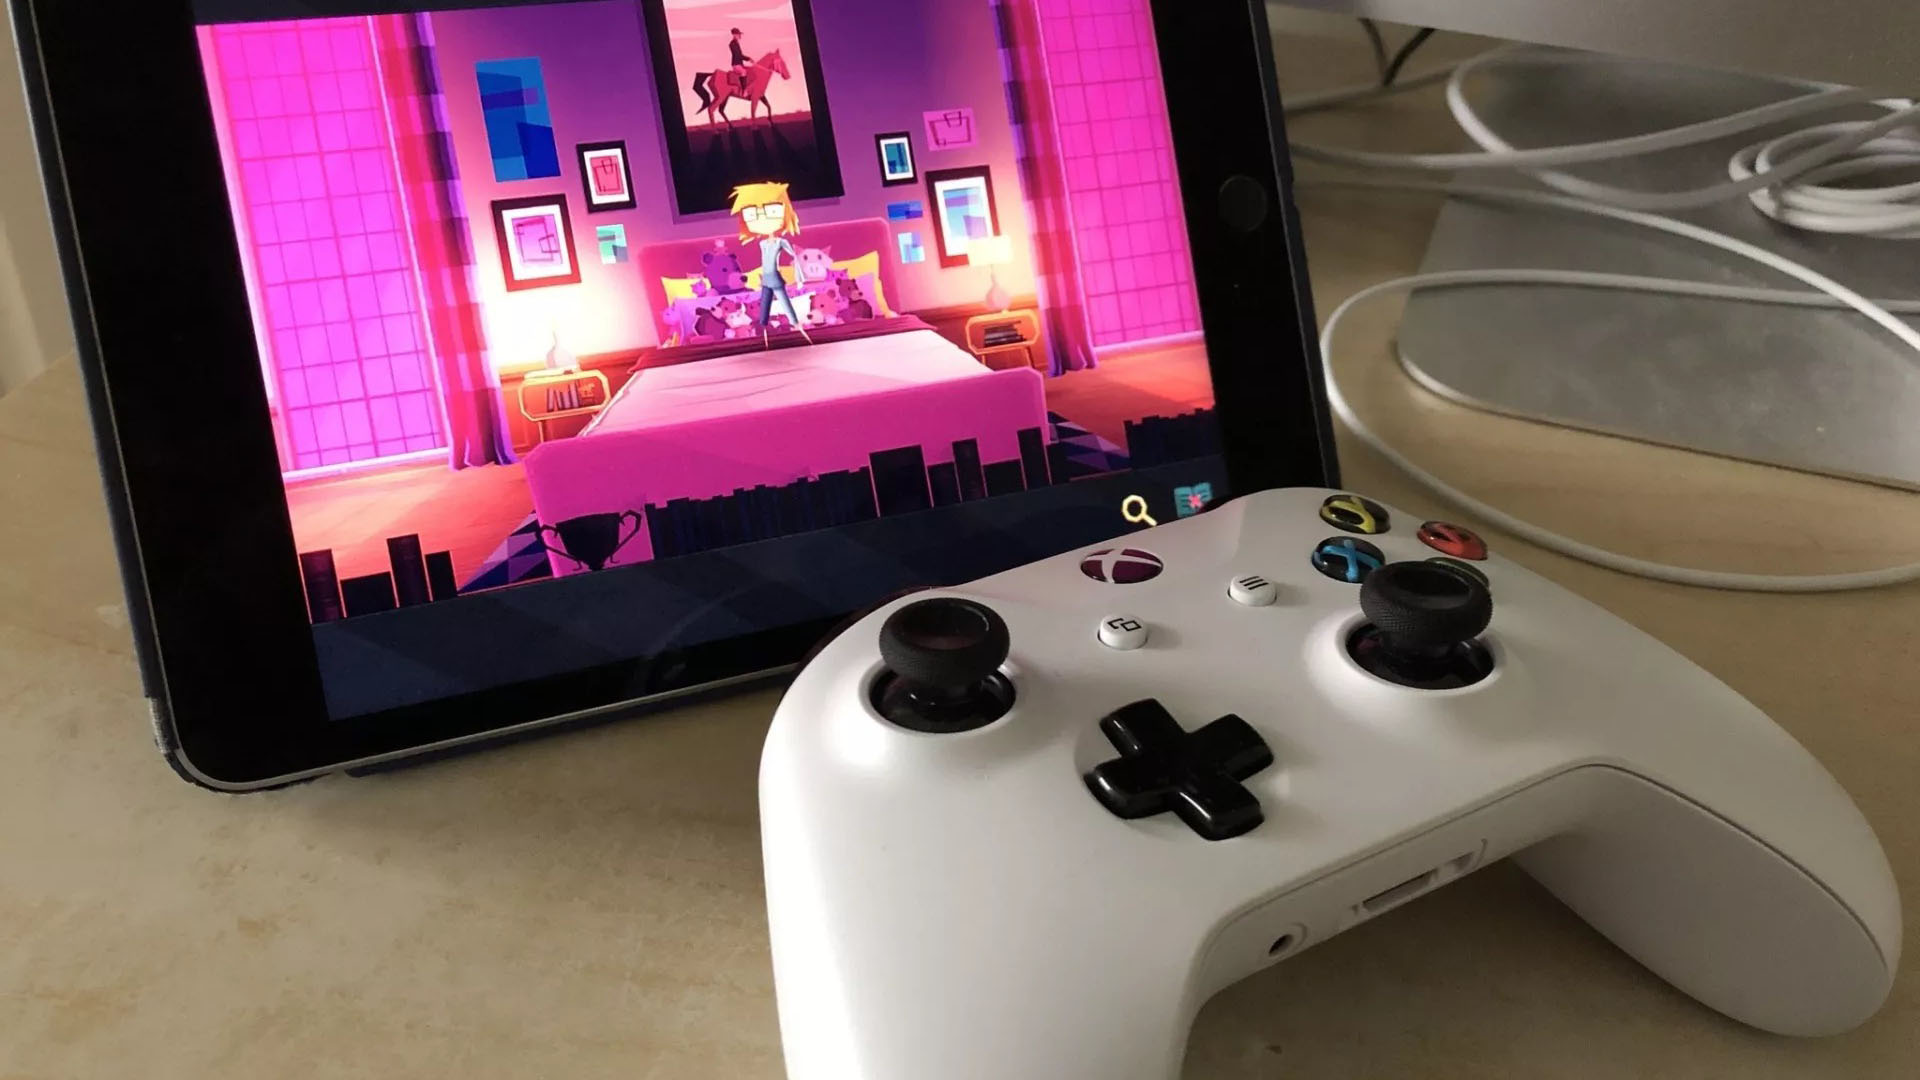 Microsoft makes rapid progress bringing Xbox gaming to iPhone and iPad